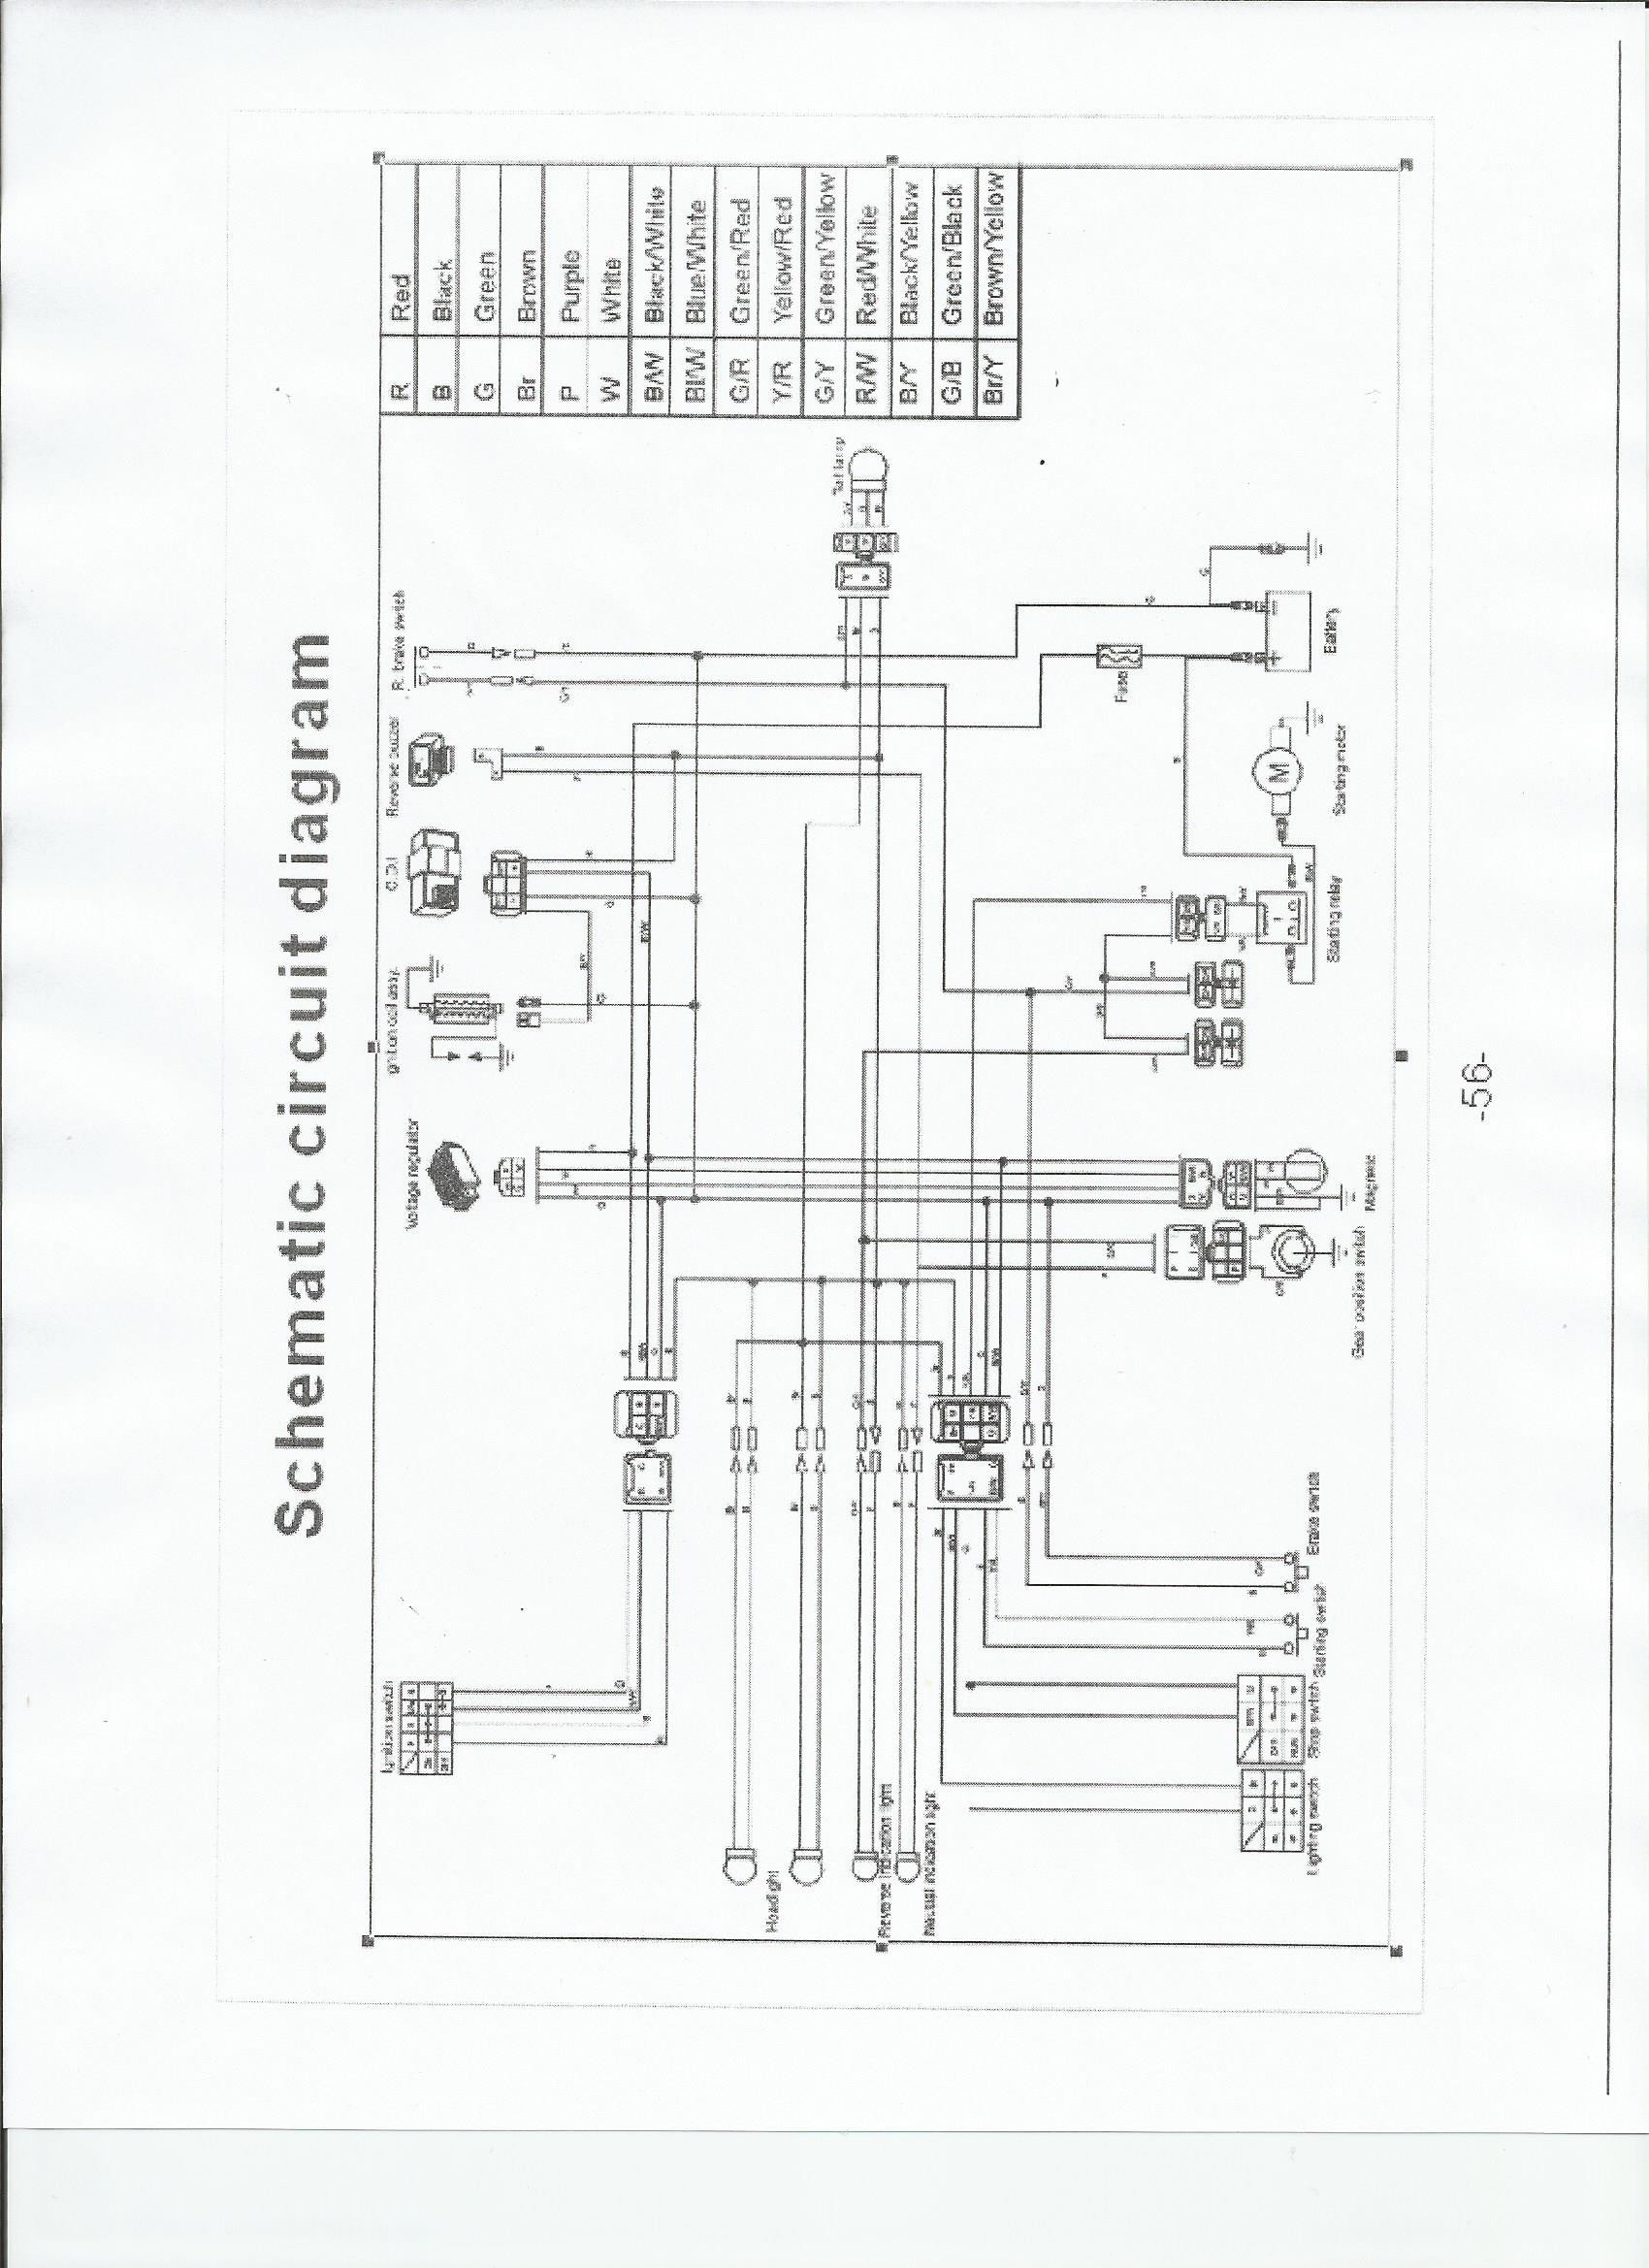 Chinese Four Wheeler Wire Diagram Bearcat 110cc atv Wiring Diagram Wiring Diagrams Schematics Of Chinese Four Wheeler Wire Diagram